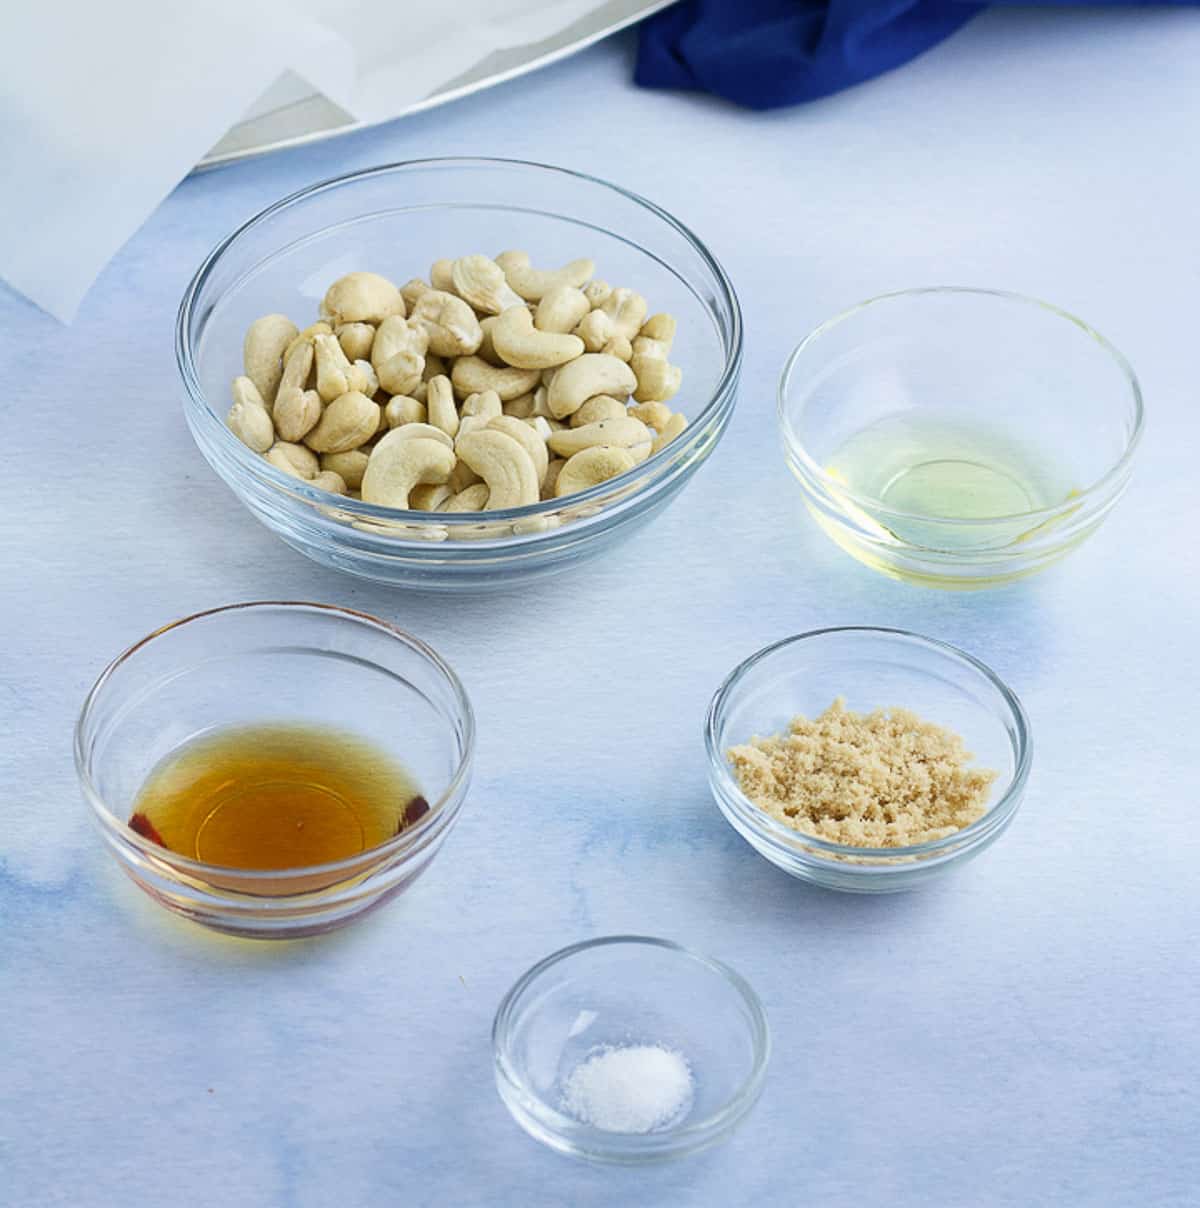 Ingredients to make maple roasted cashews